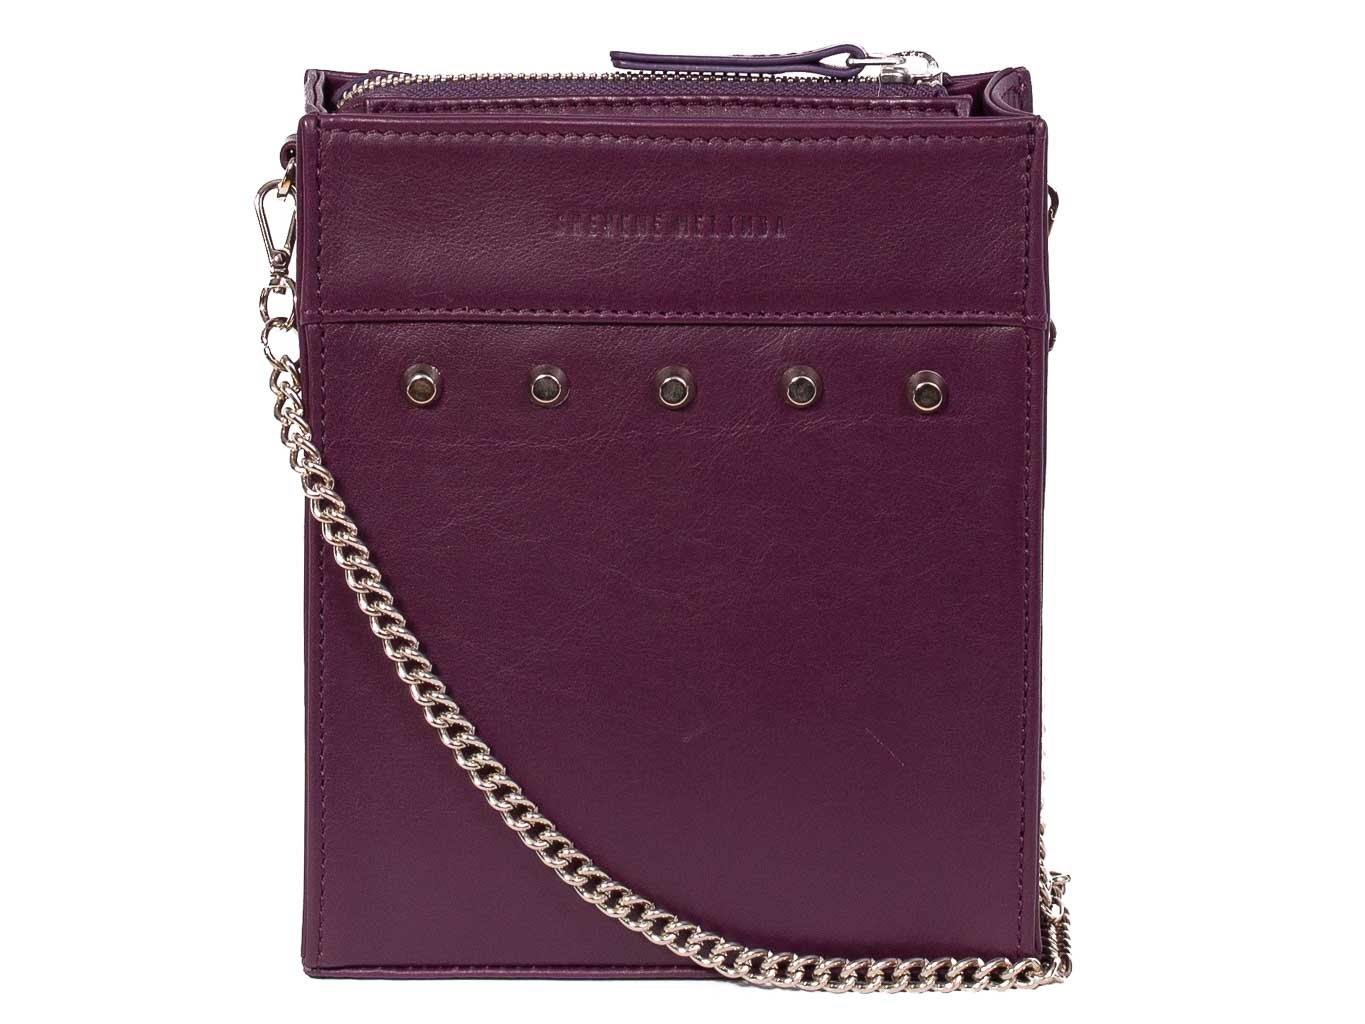 Messenger Studded Handbag in Deep Purple by Sherene Melinda front strap